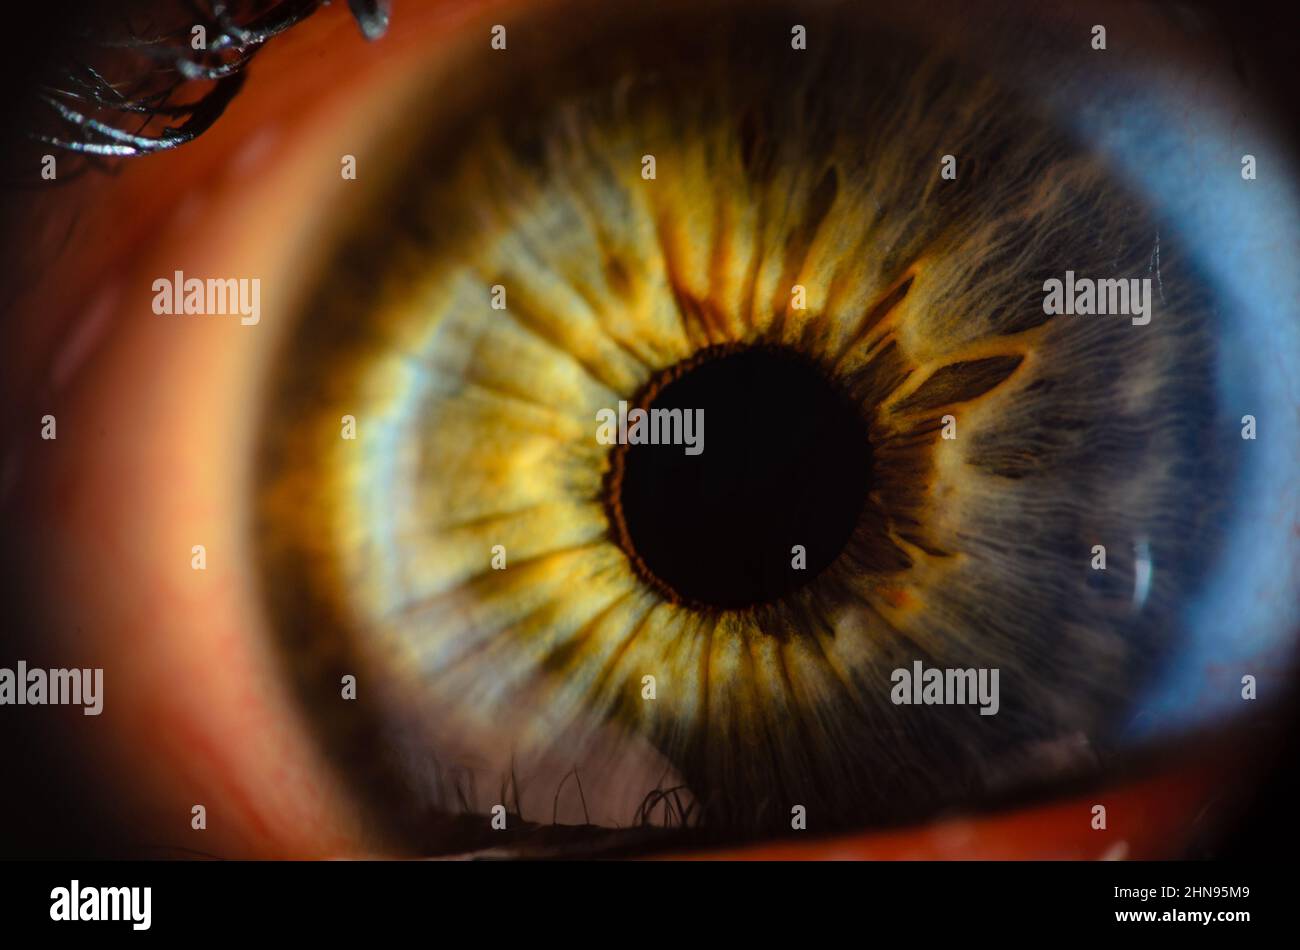 Close up macro photo of human eye. Human eye close-up detail with shallow depth of field. Stock Photo